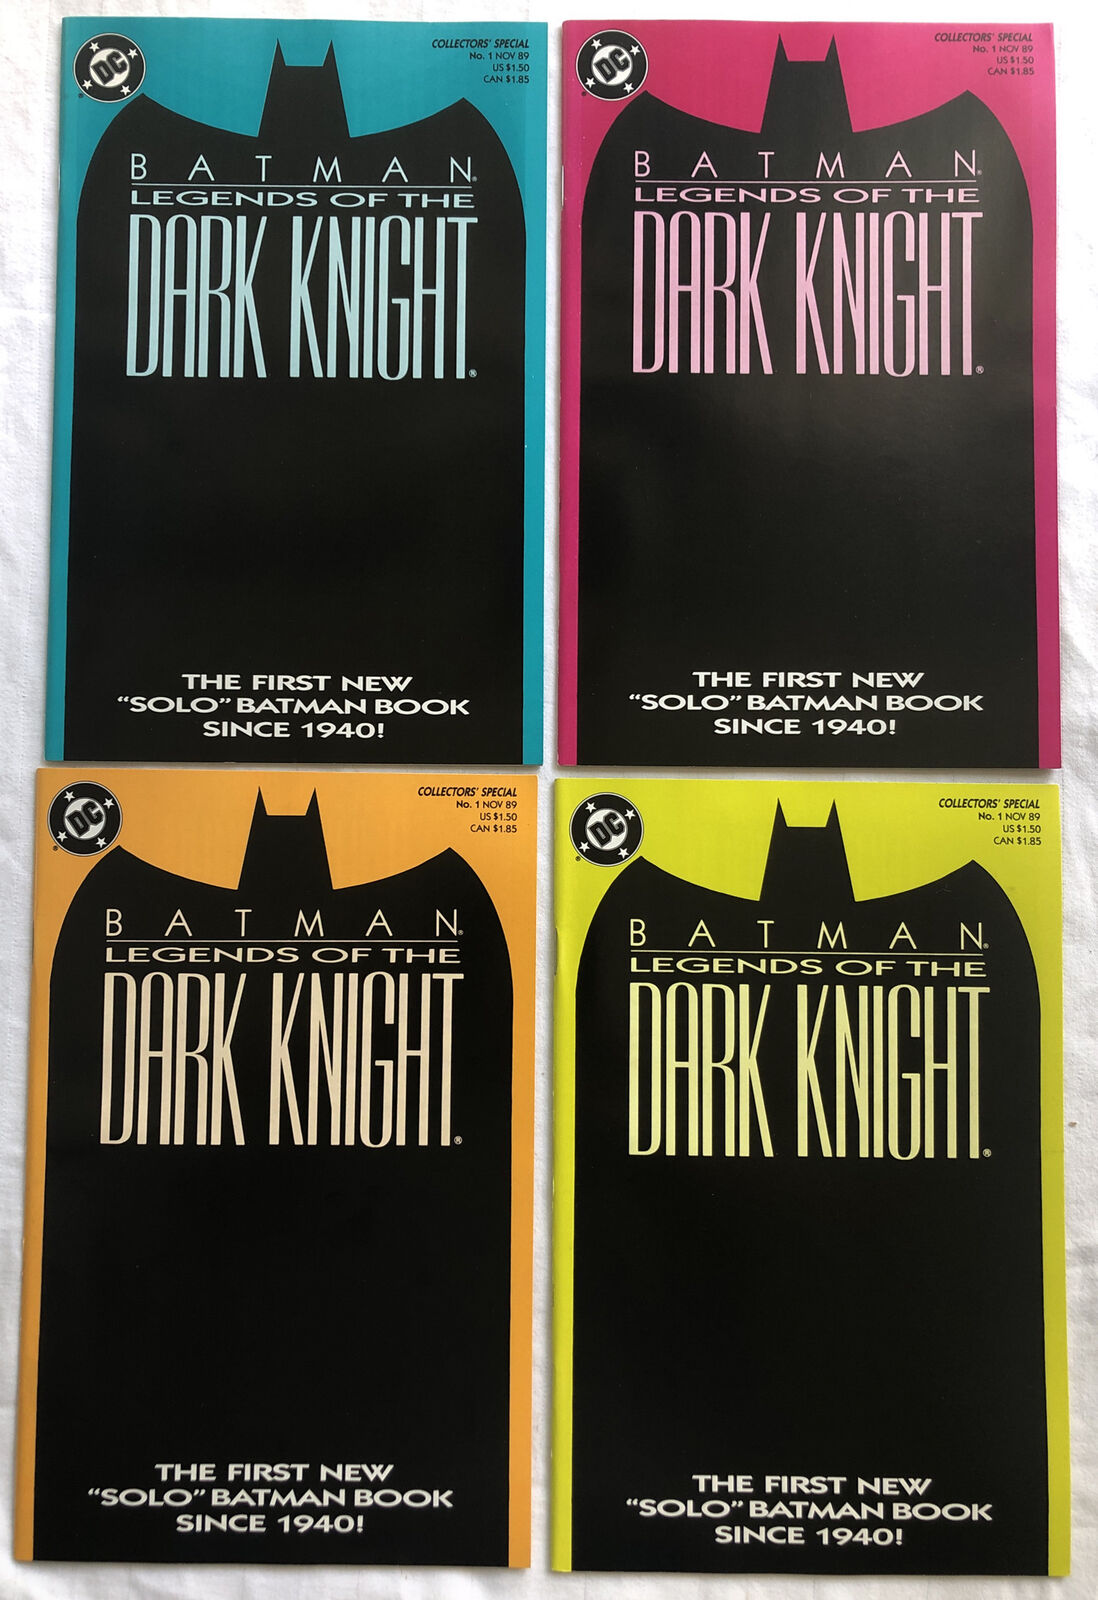 Batman: Legends of the Dark Knight #1 ALL COVERS (1989, DC Comics)